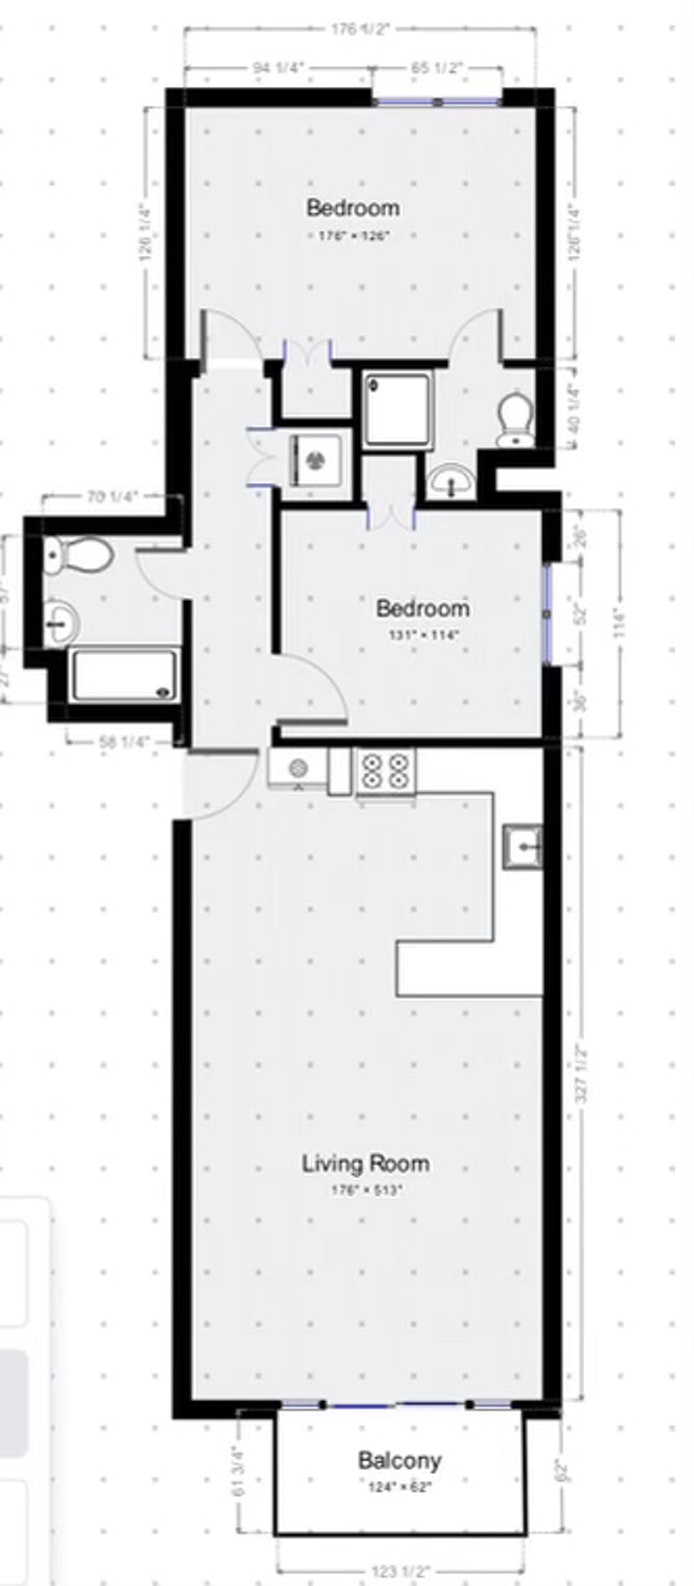 Floorplan for 560 19th Street, 3B